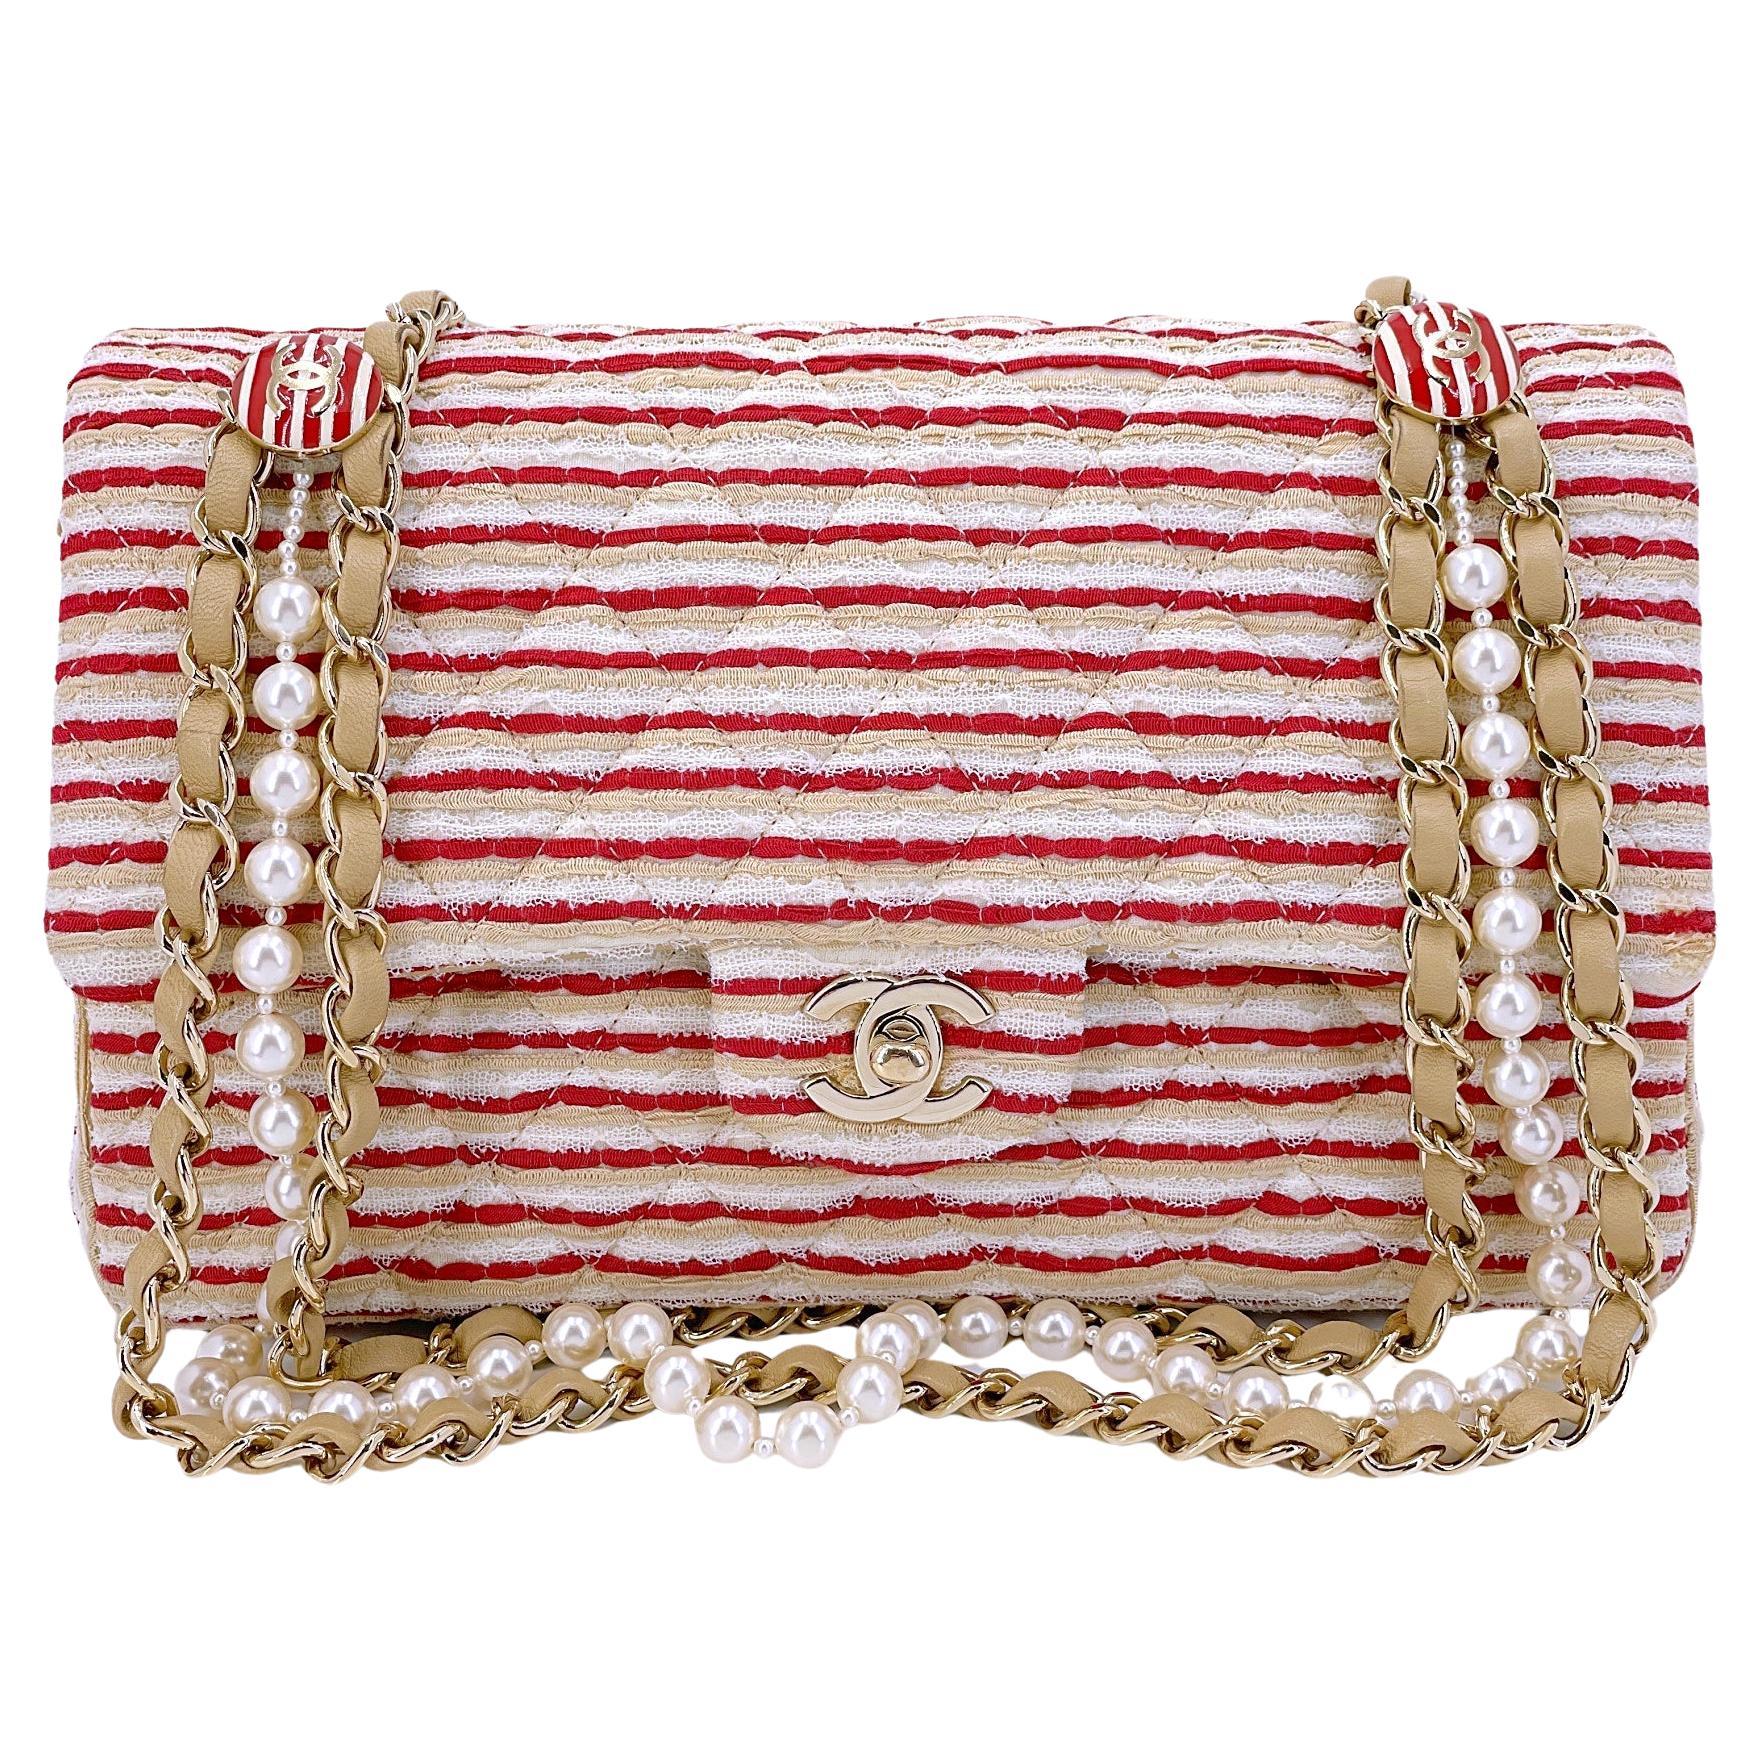 Chanel Classic Handbag